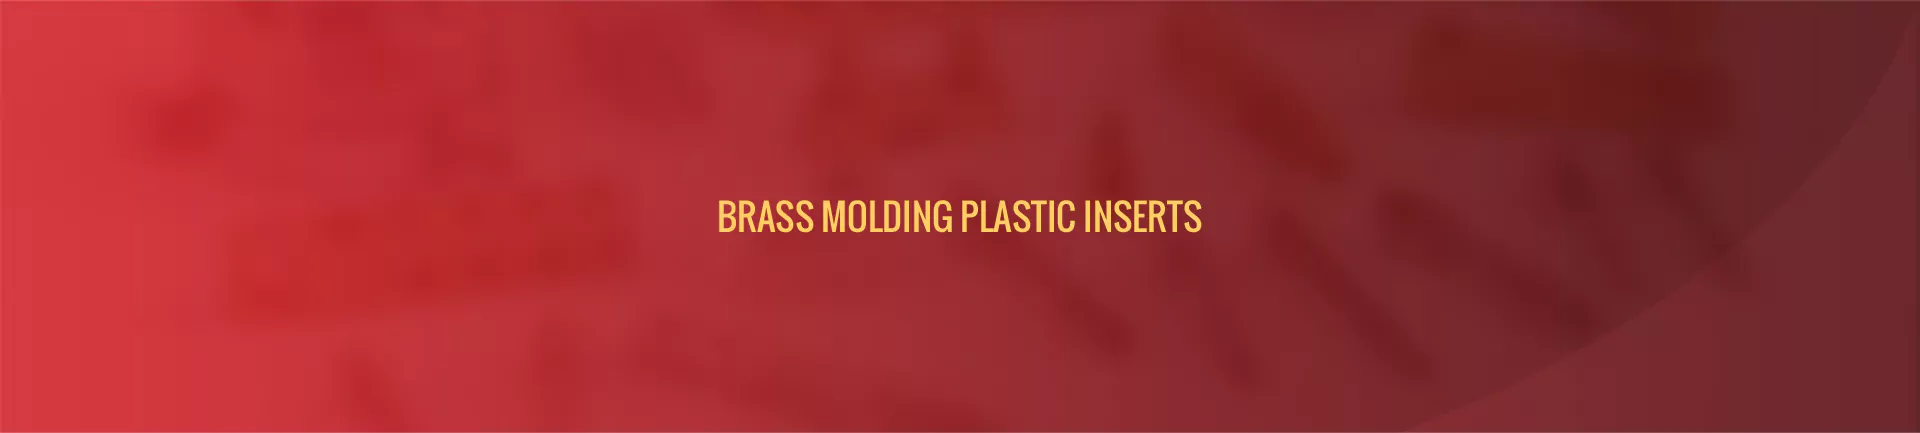 brass-molding-plastic-inserts-banner